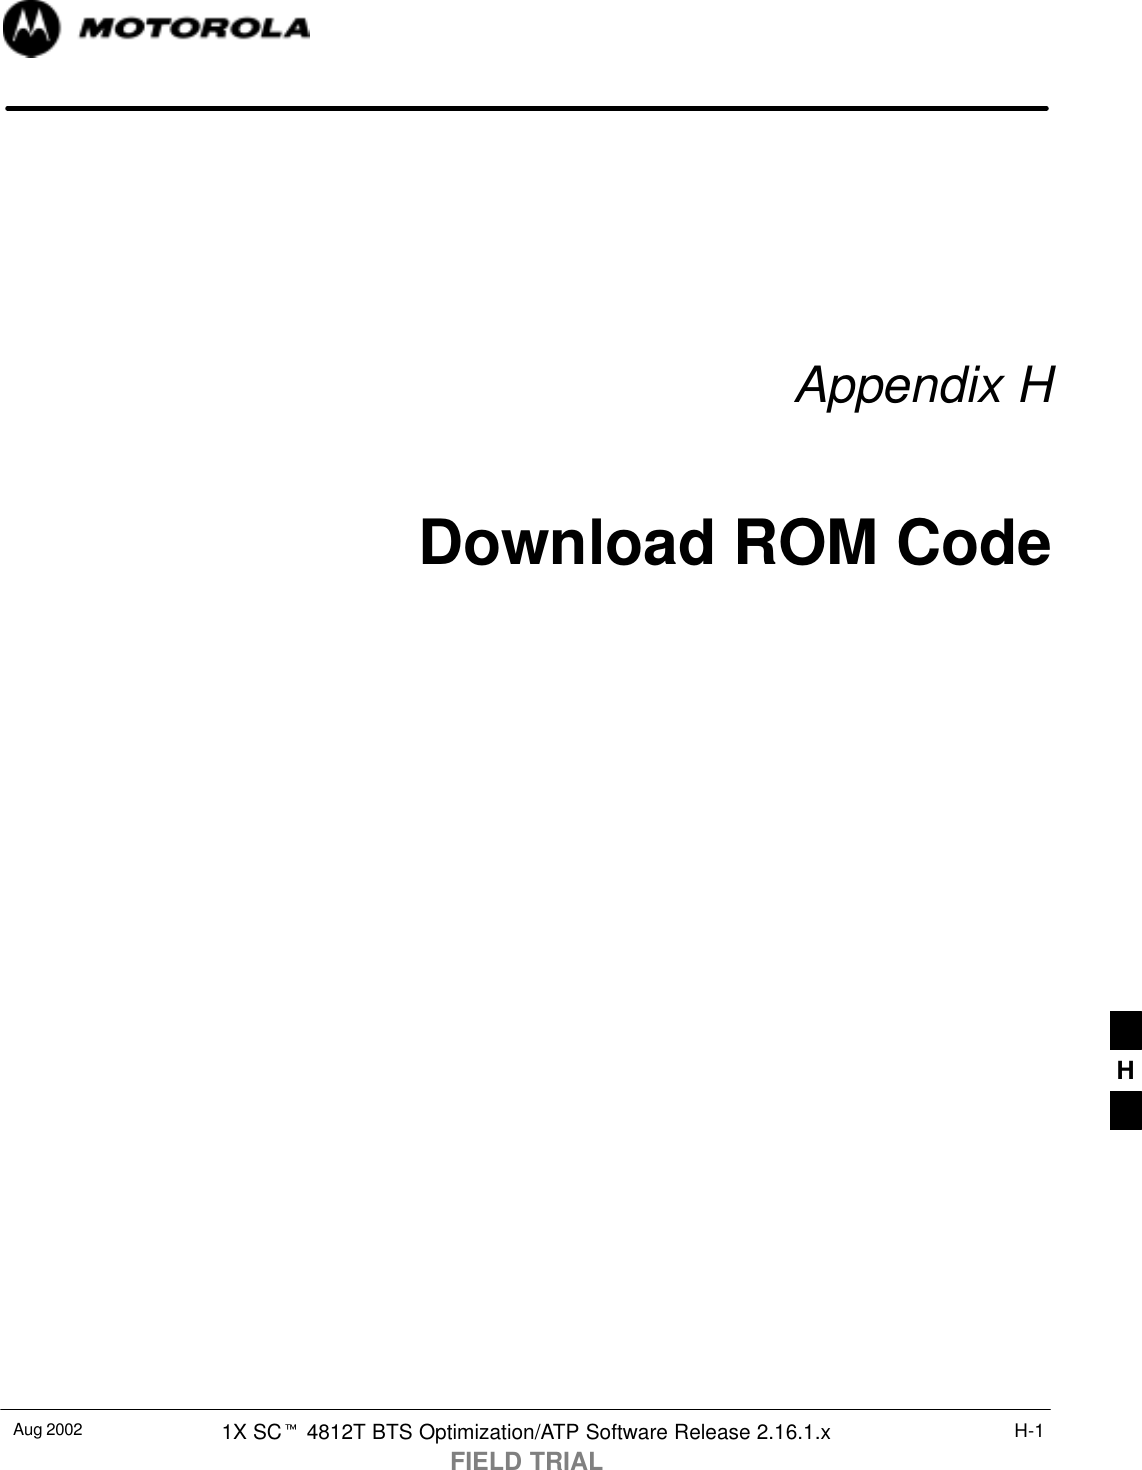 Aug 2002 1X SCt 4812T BTS Optimization/ATP Software Release 2.16.1.xFIELD TRIALH-1Appendix HDownload ROM CodeH